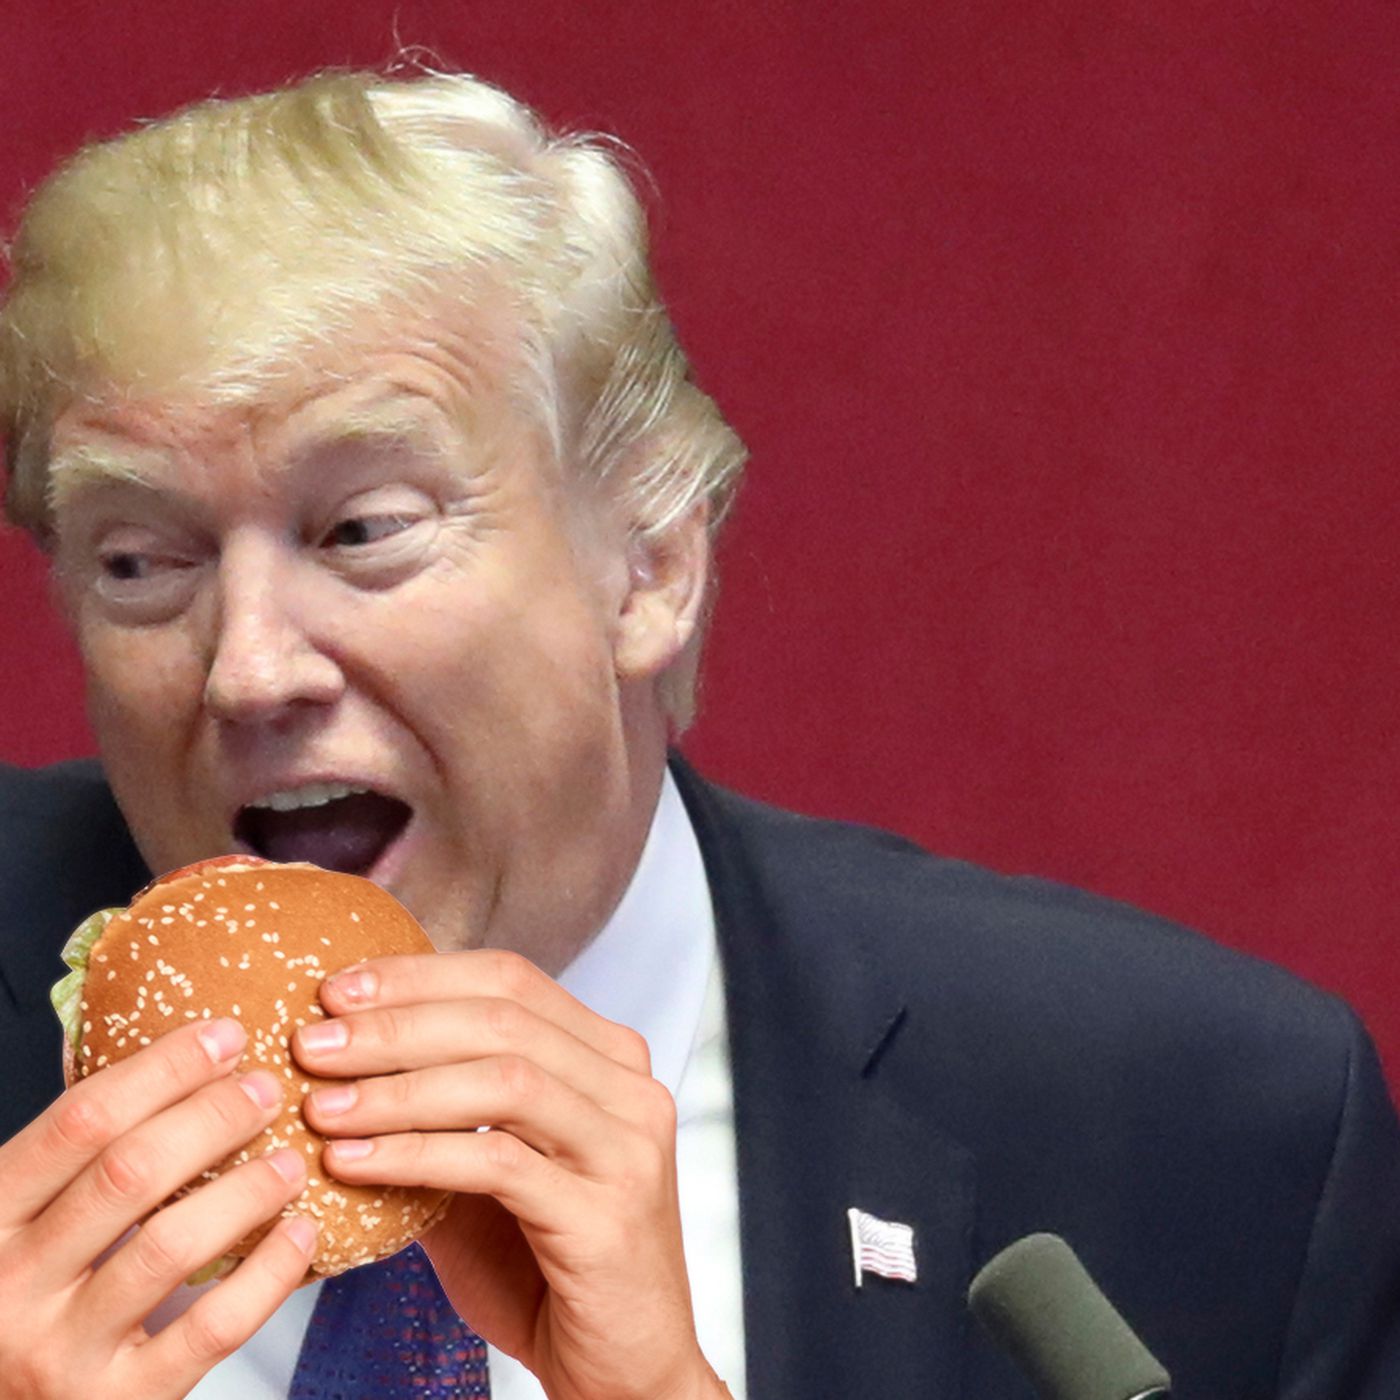 trump_eating_burger.jpg